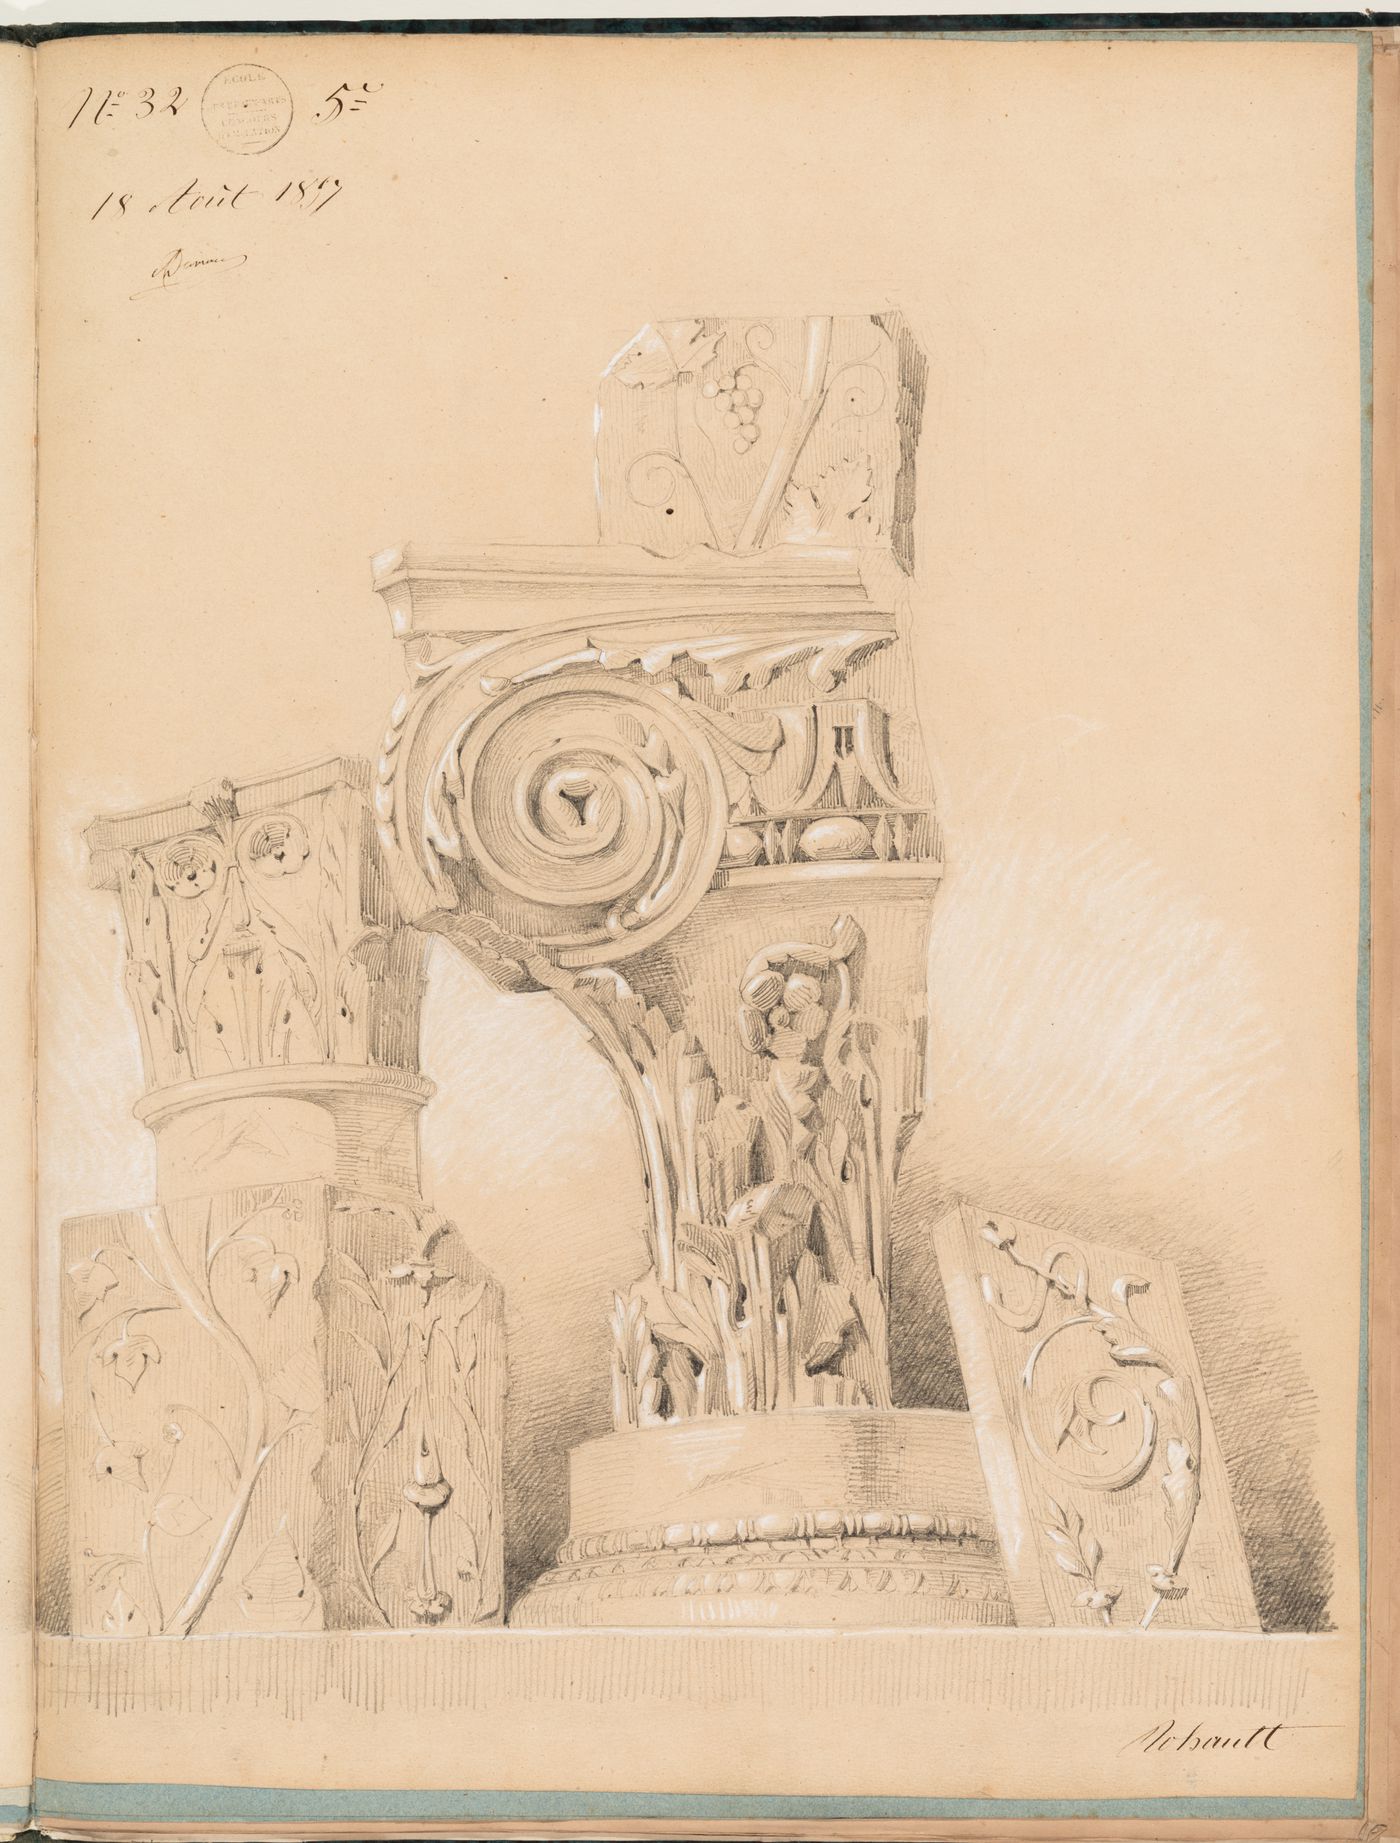 Concours d'émulation entry, 18 August 1857: Study of architectural fragments